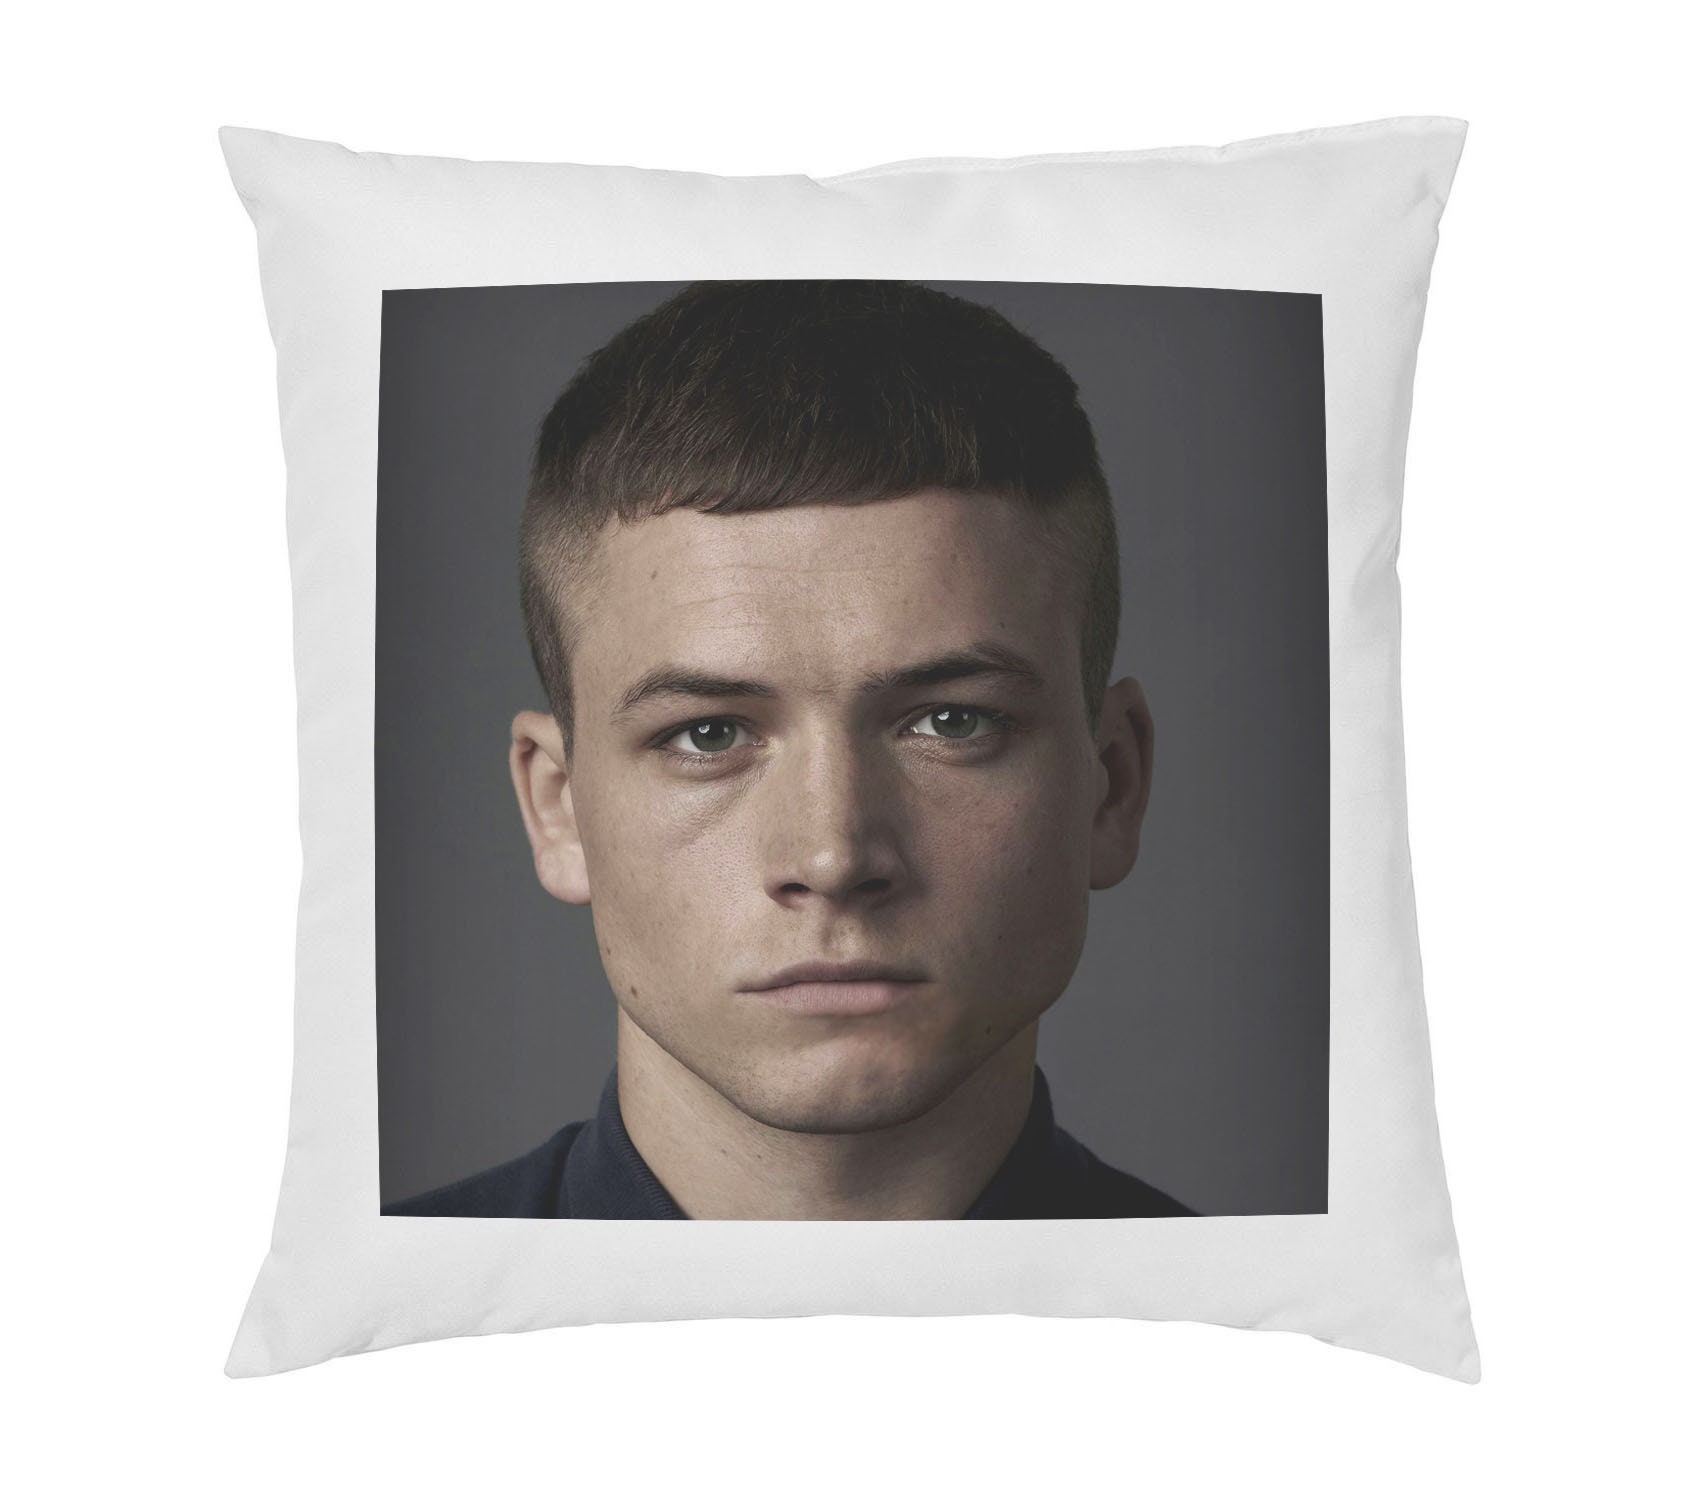 Jamie redknapp coussin pillow cover case-poster tasse t shirt cadeau